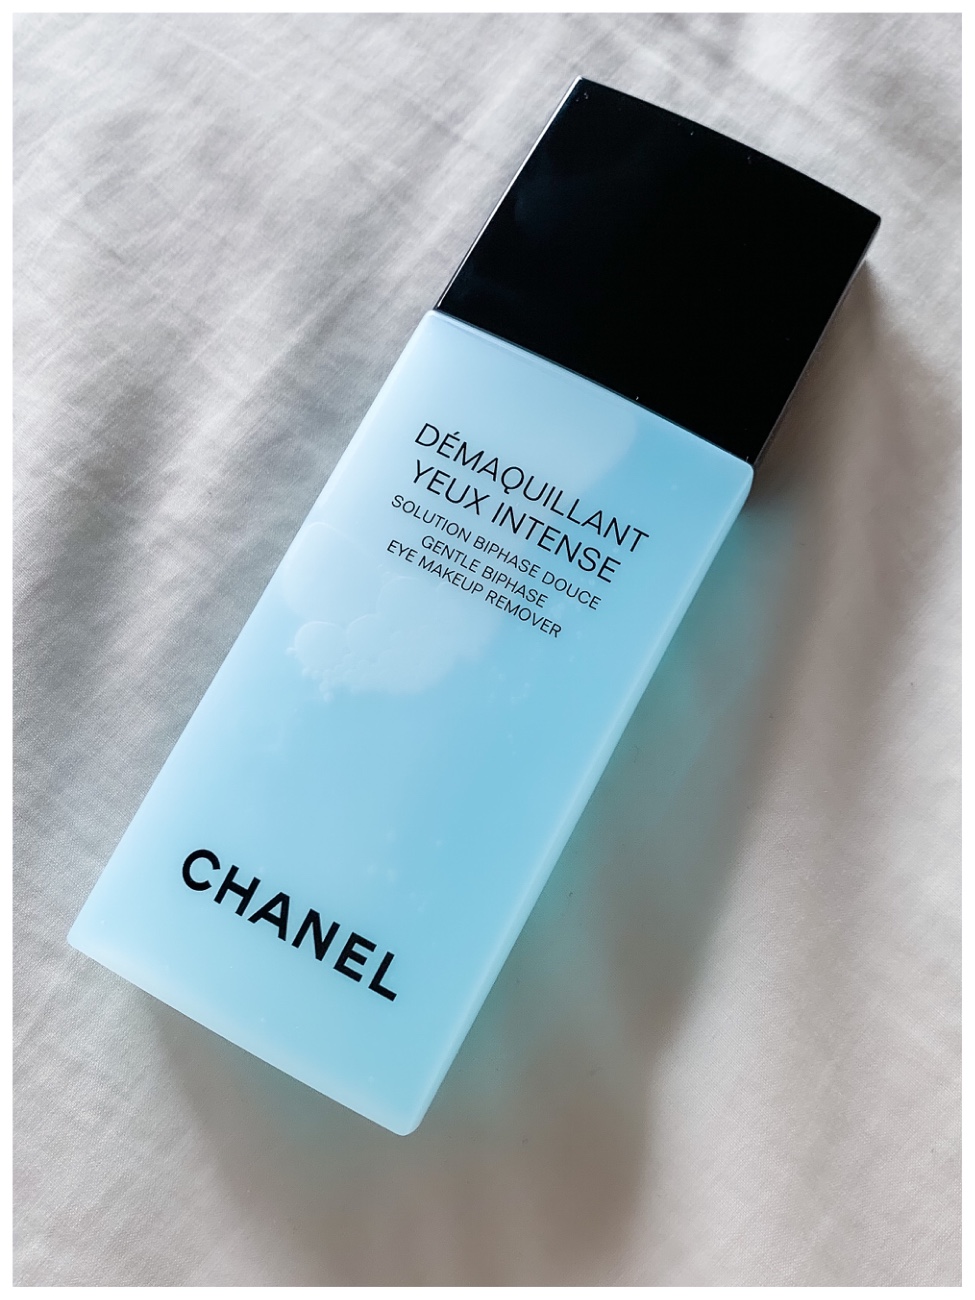 Demaquillant Gentle Intense Eye Yeux Makeup Remover Bi-phase Chanel